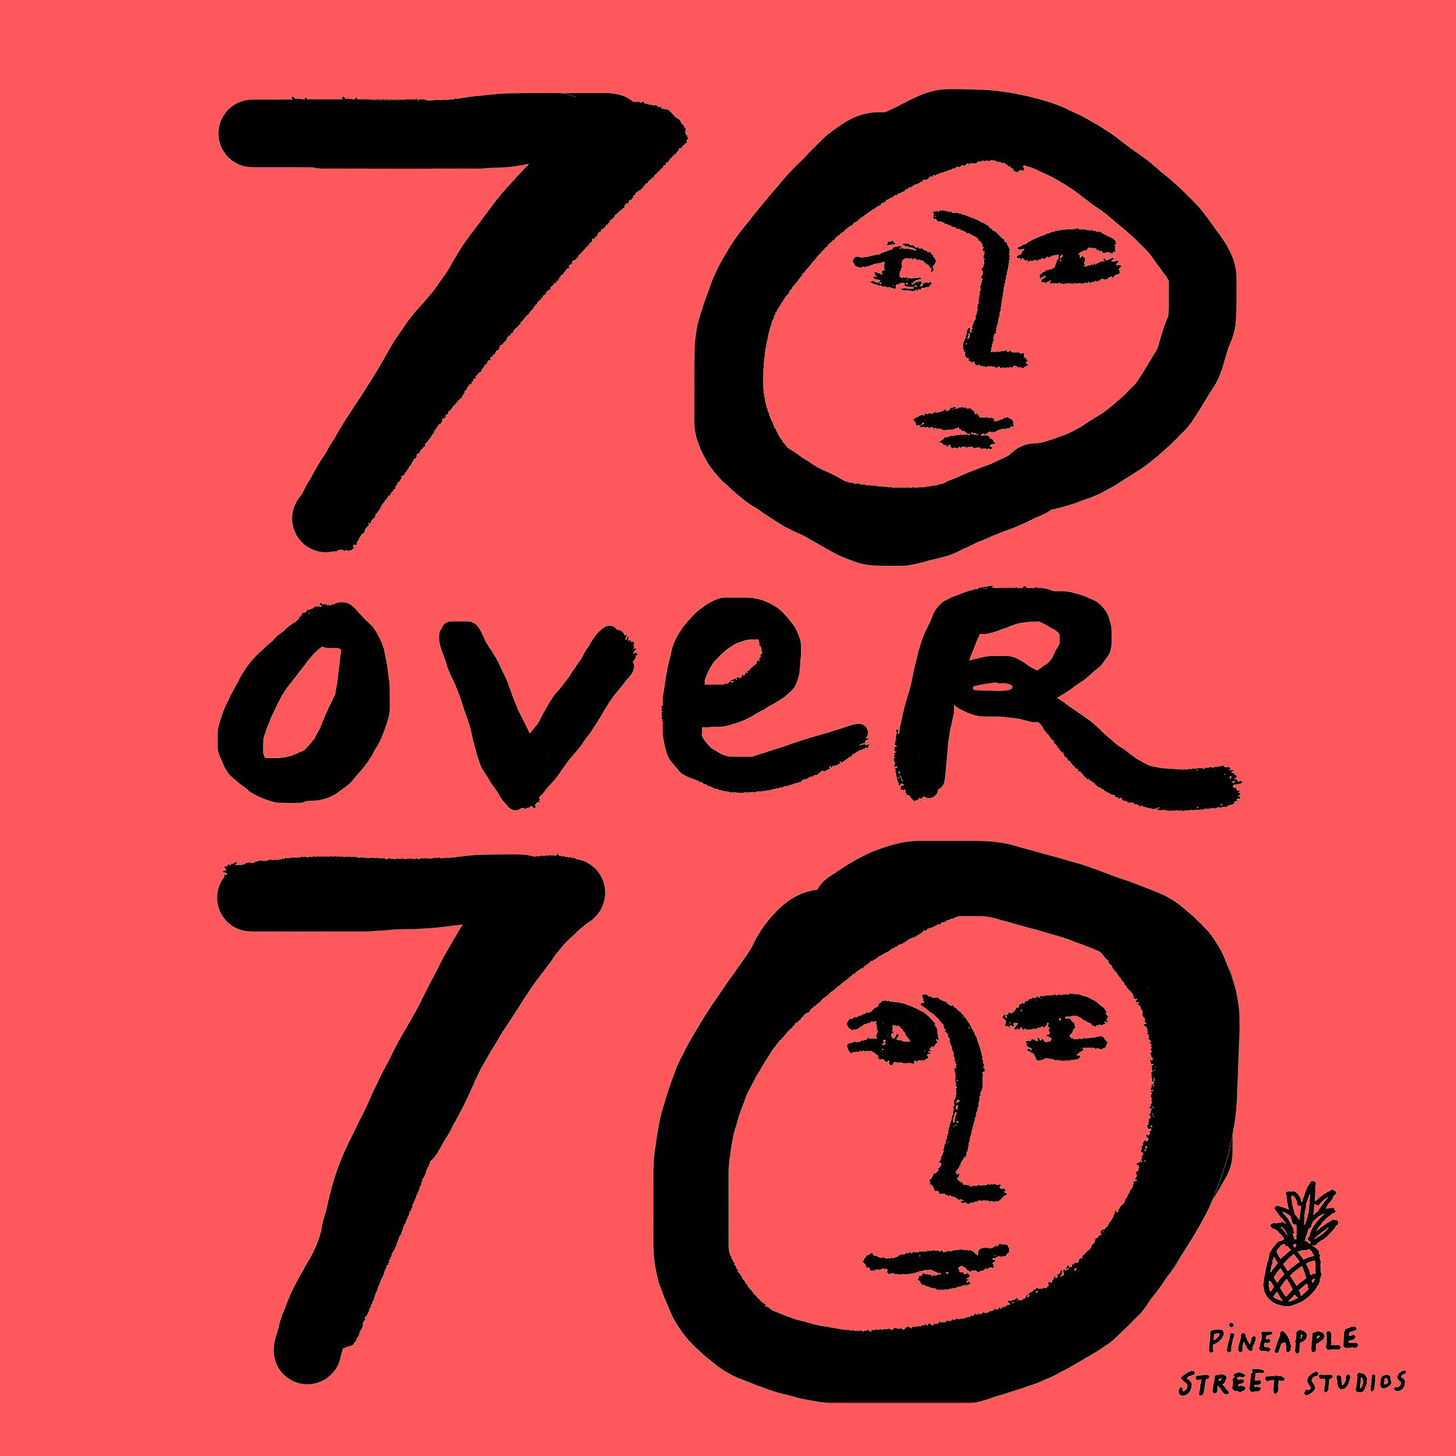 70 Over 70 — Pineapple Street Studios